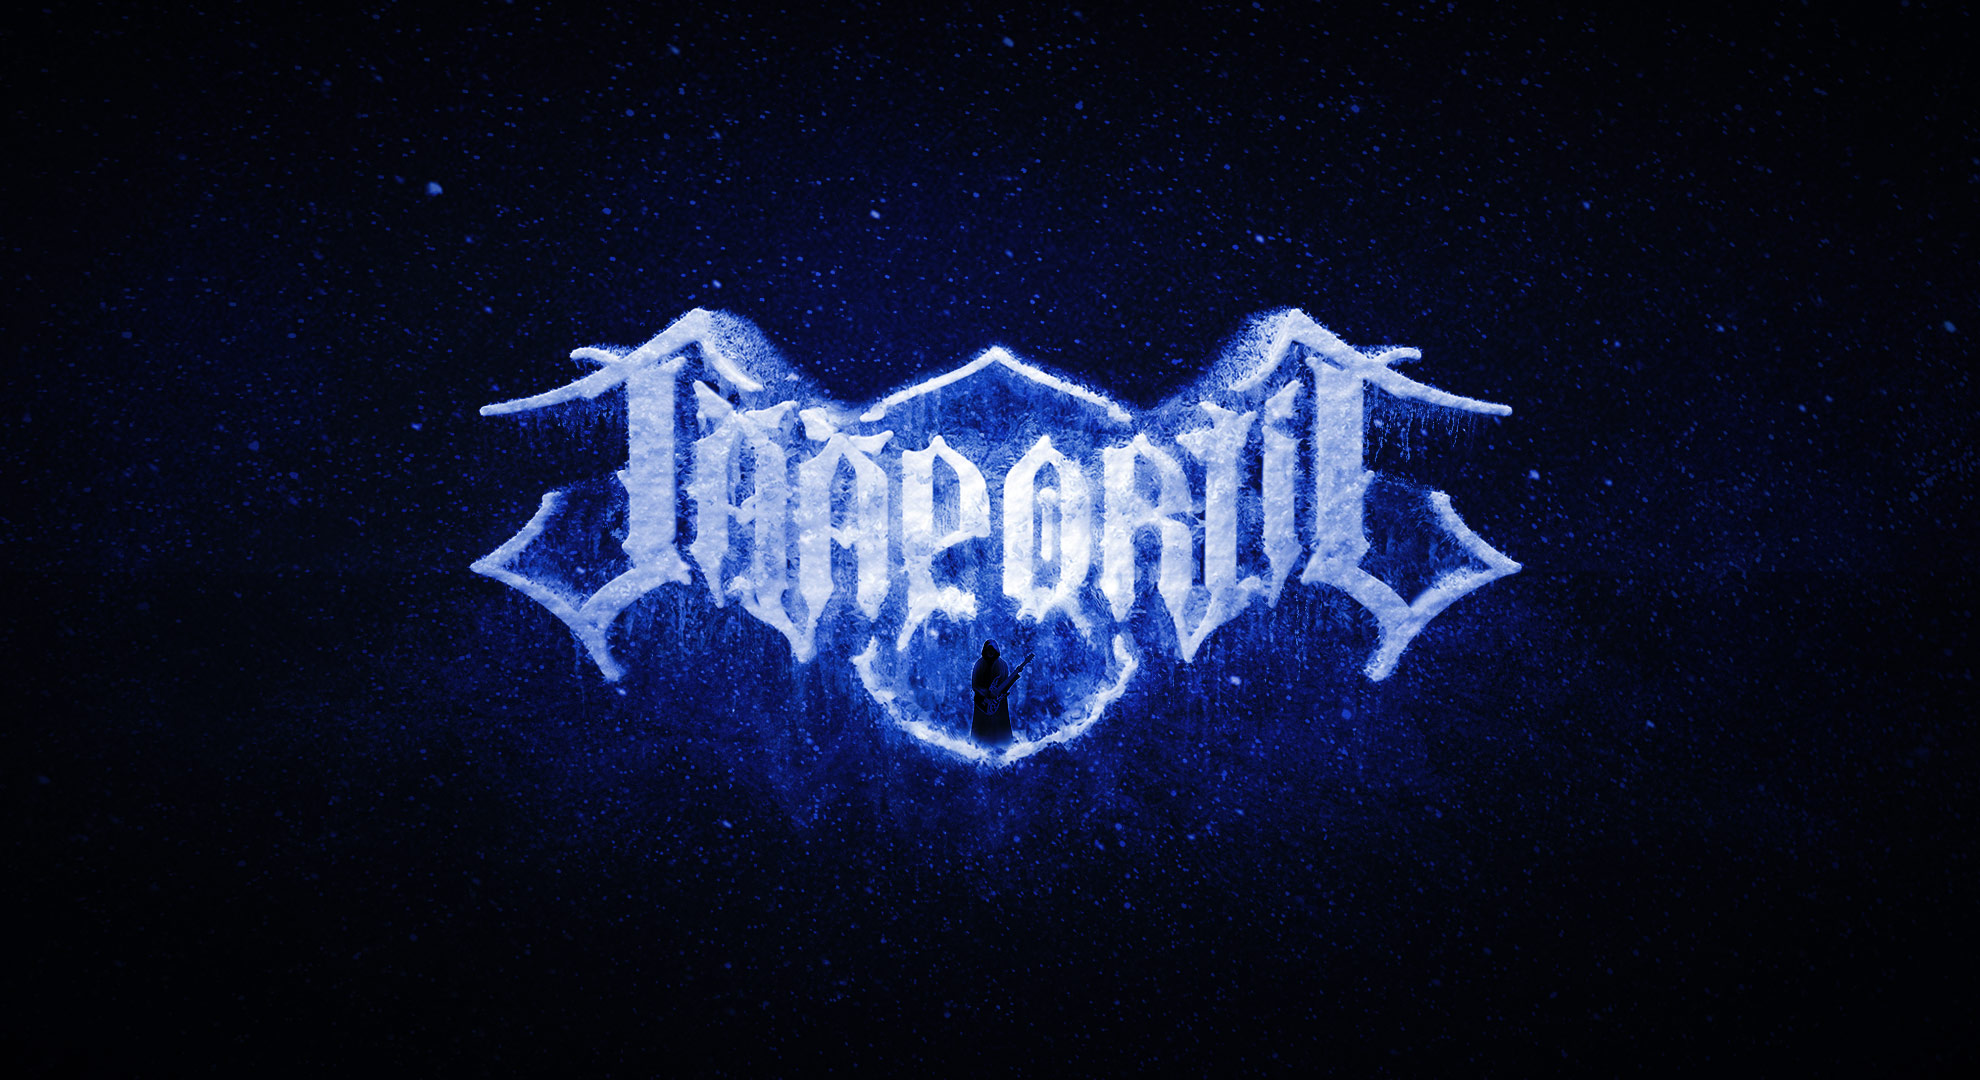 Jääportit - logo artwork